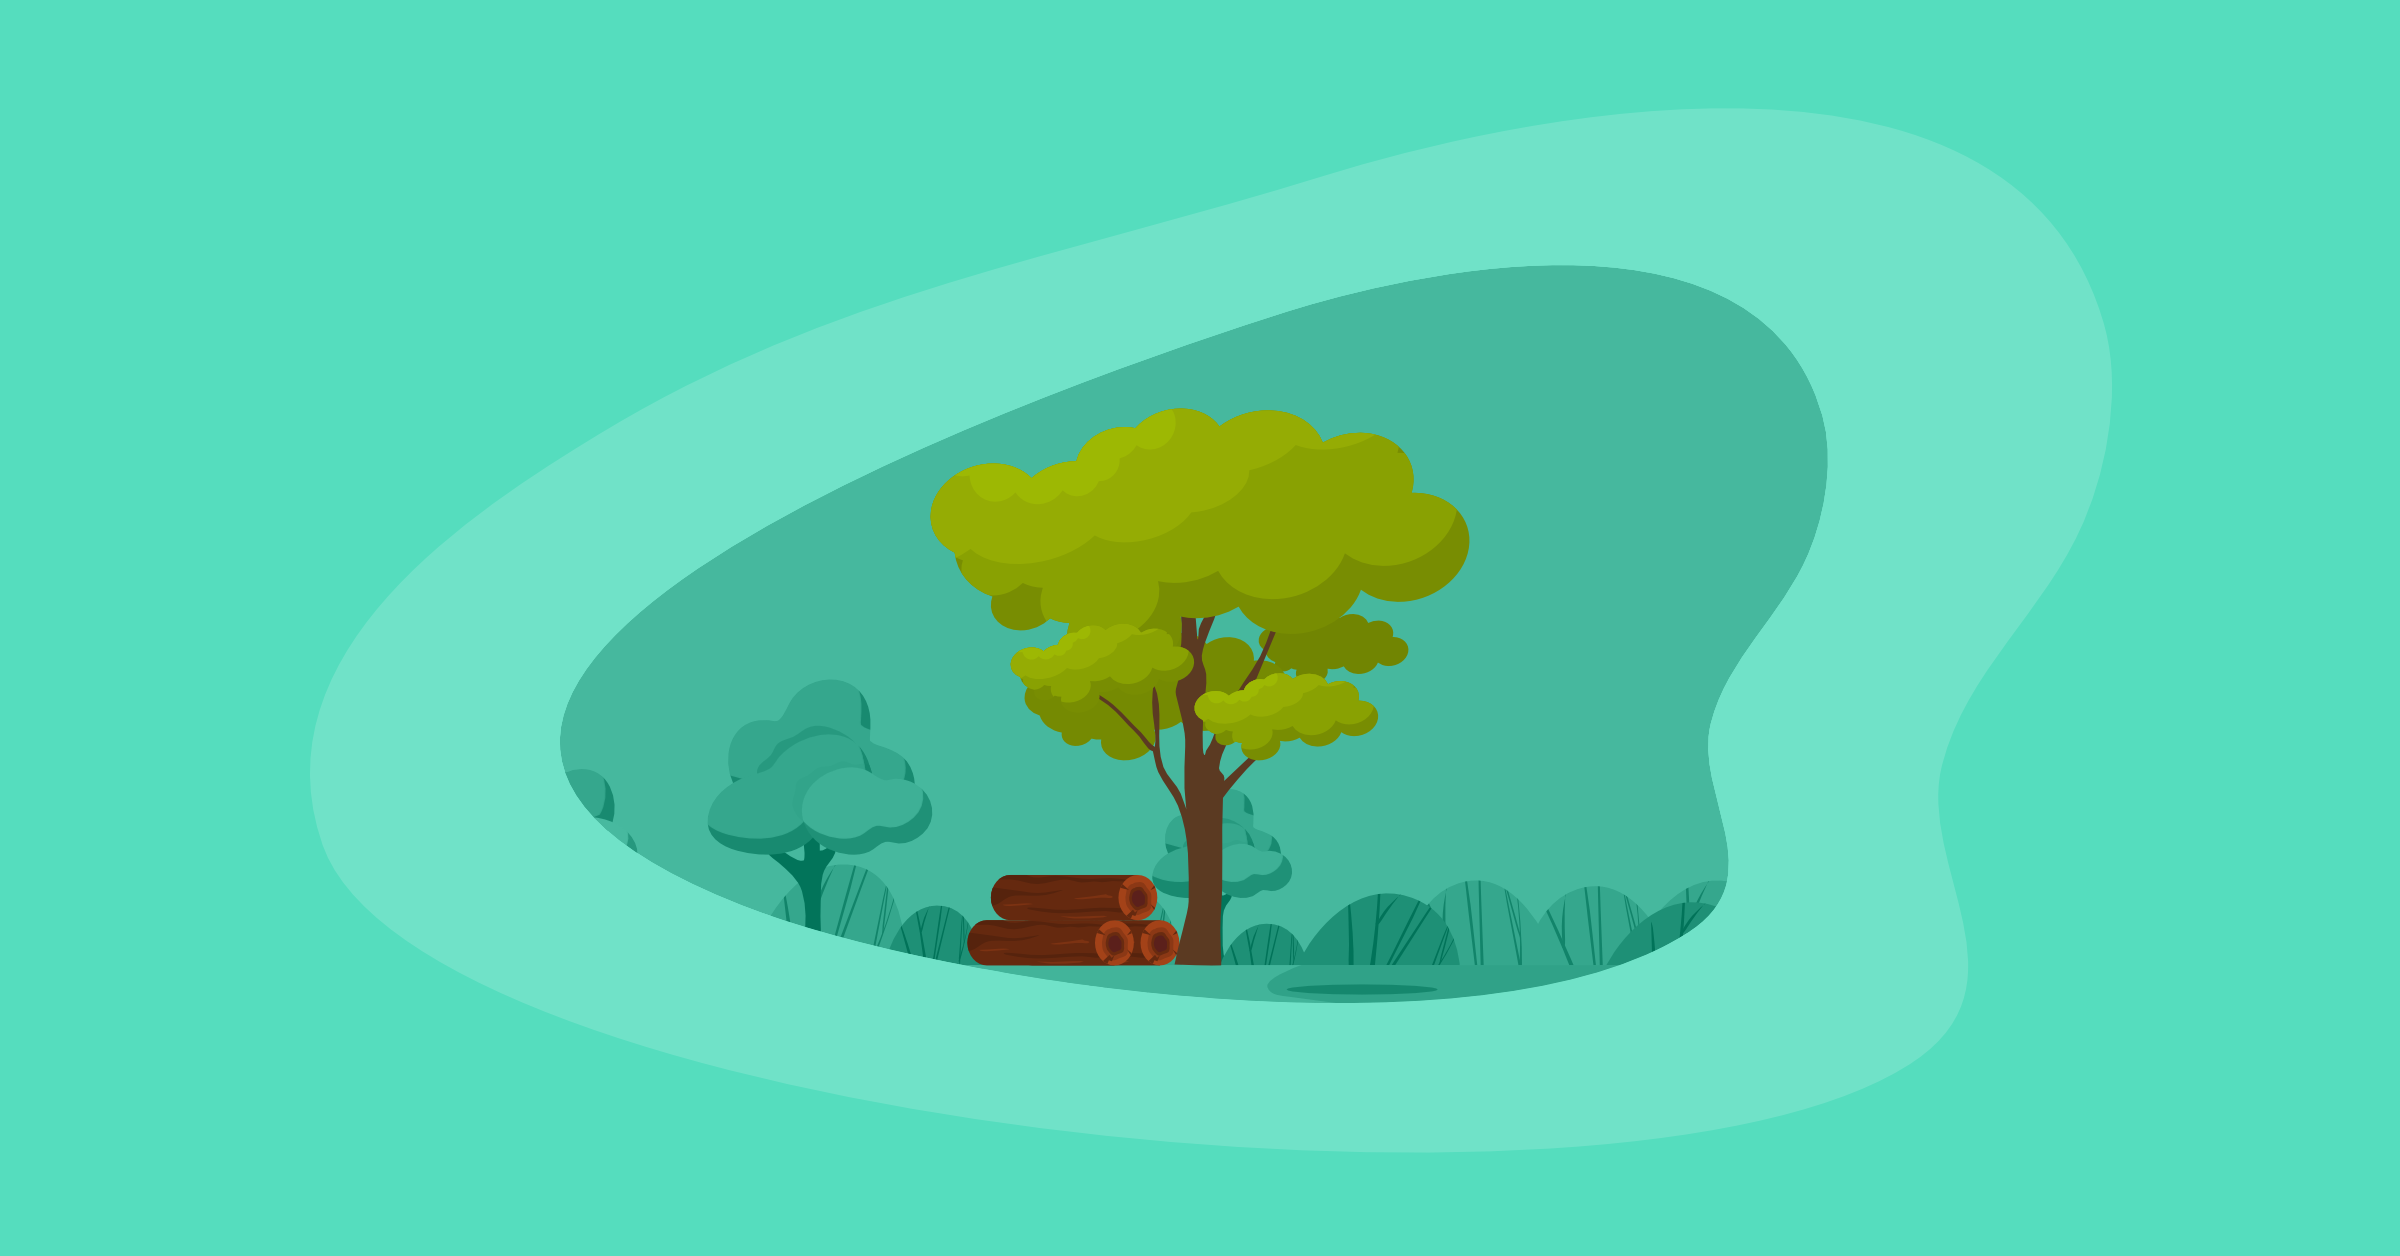 Illustration of a merbau tree and wood